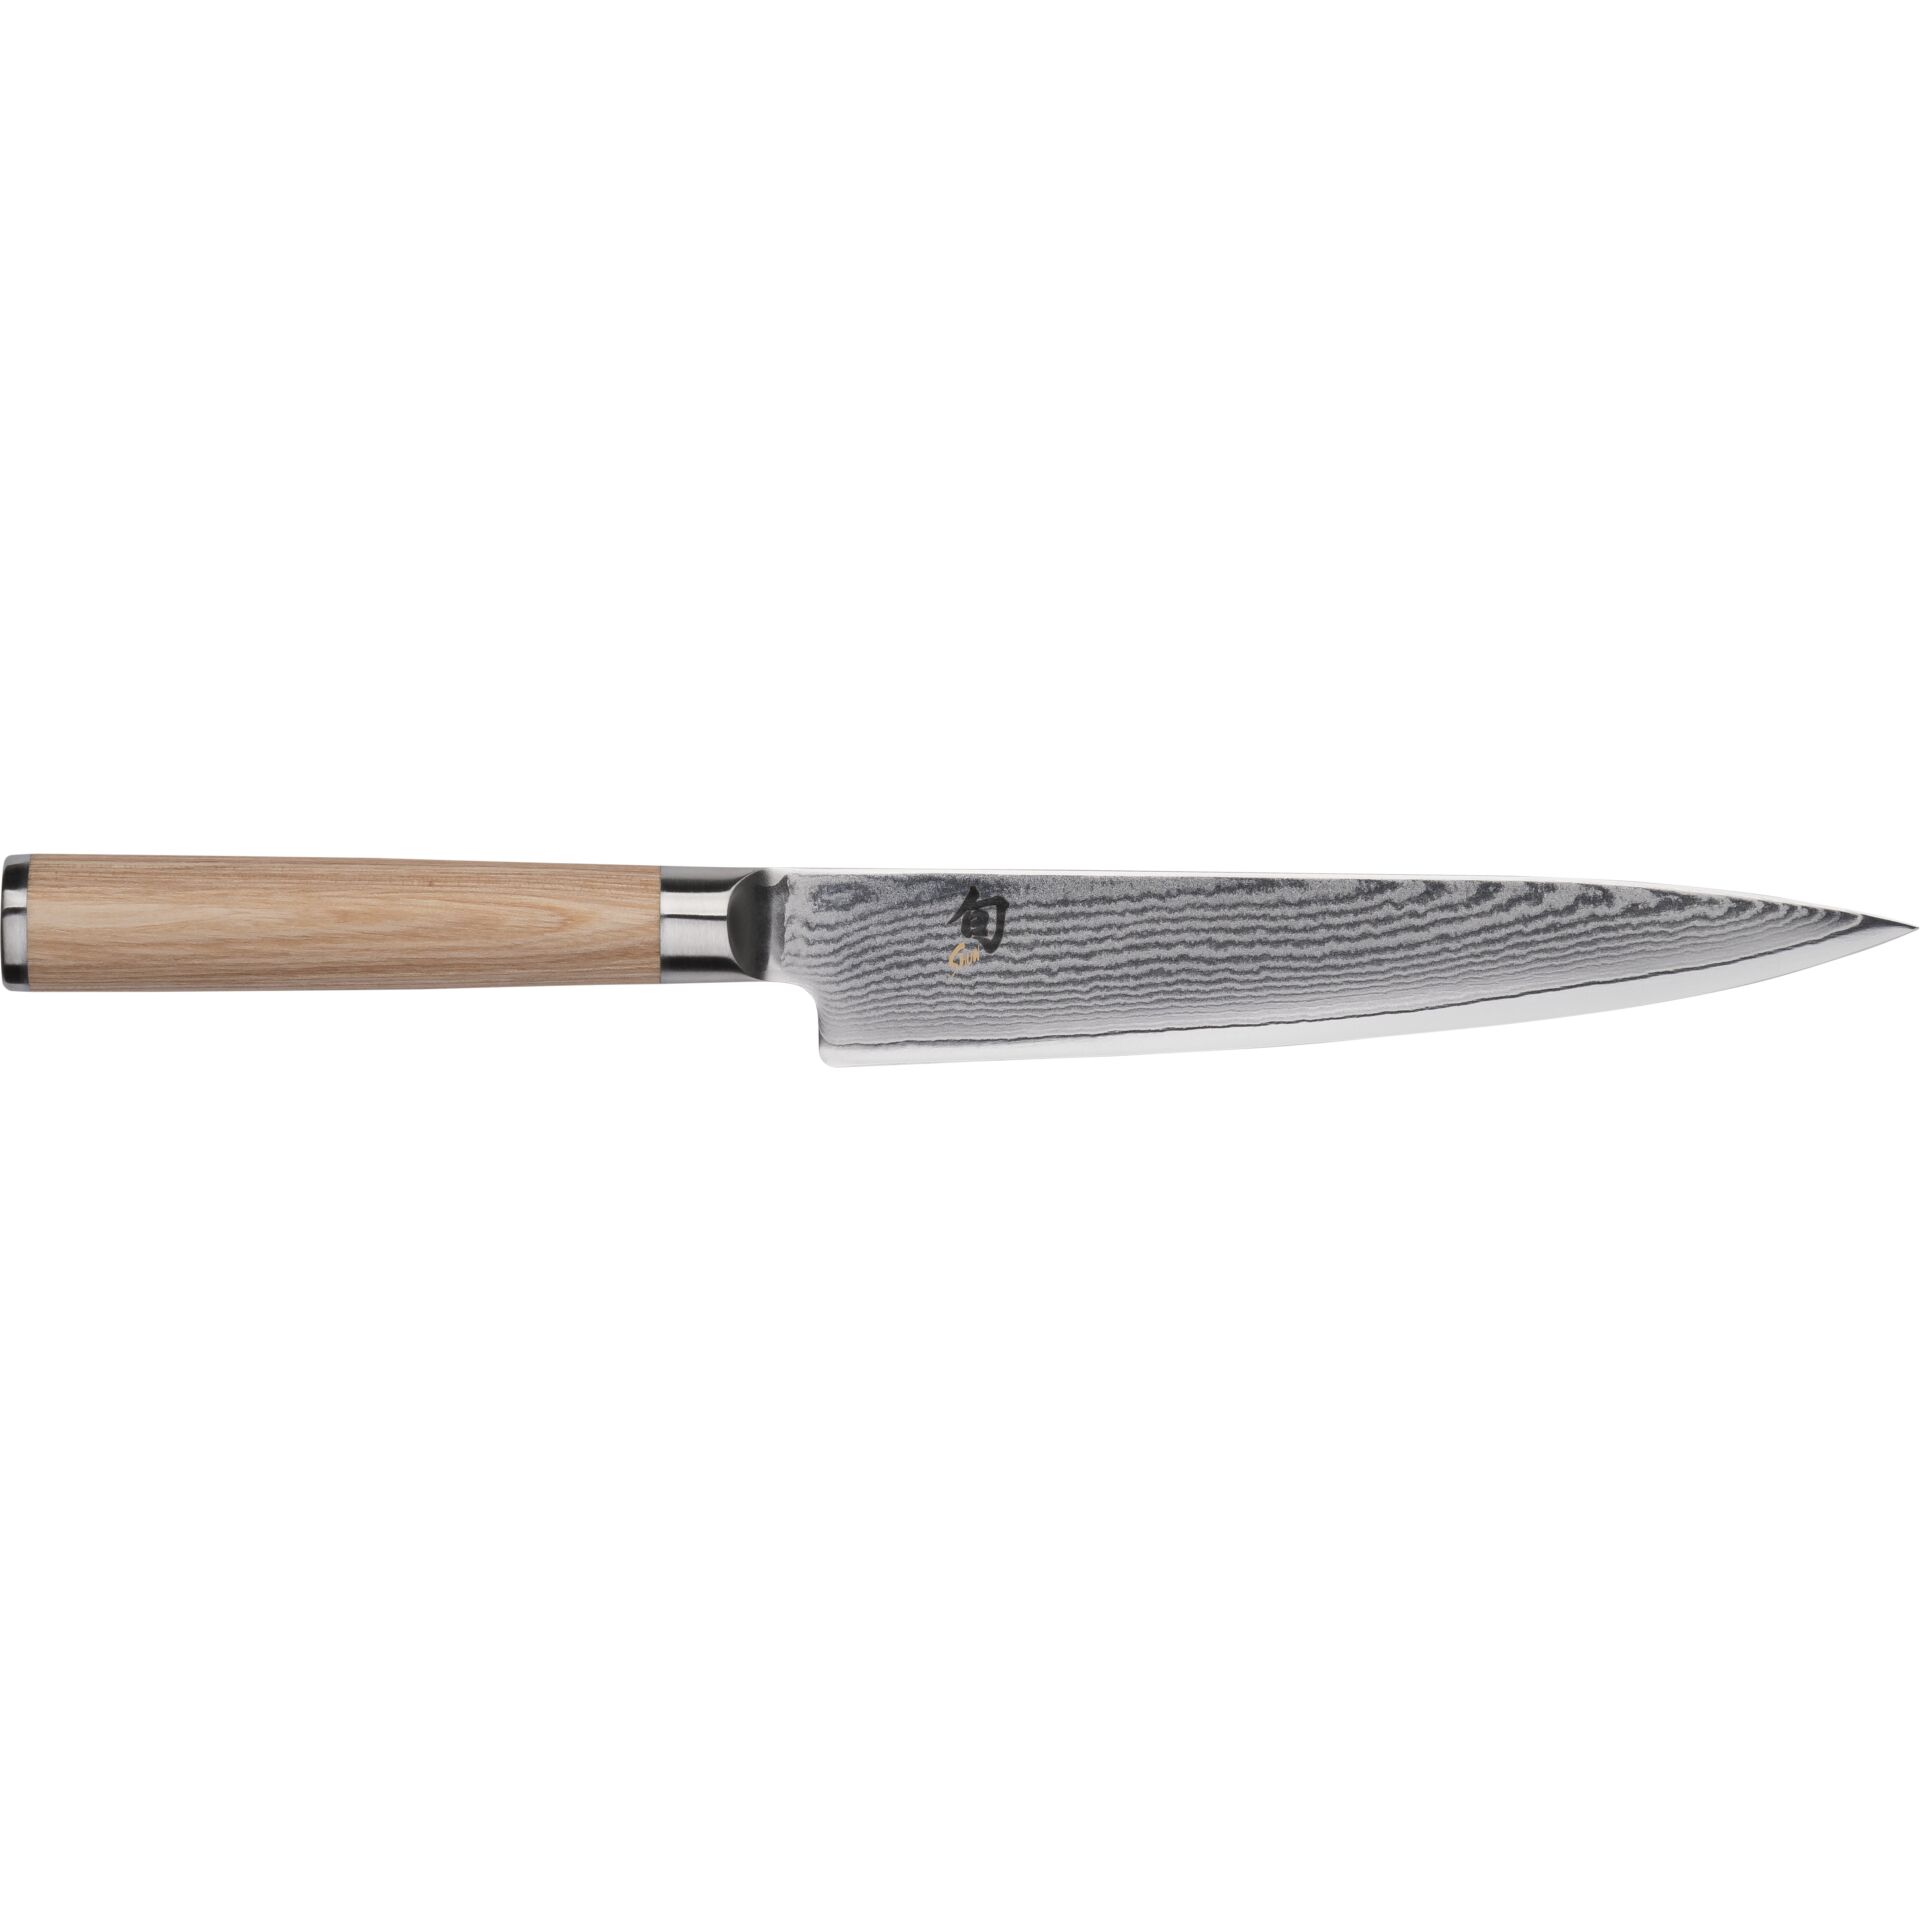 KAI Shun bianco coltello multiuso, 15 cm